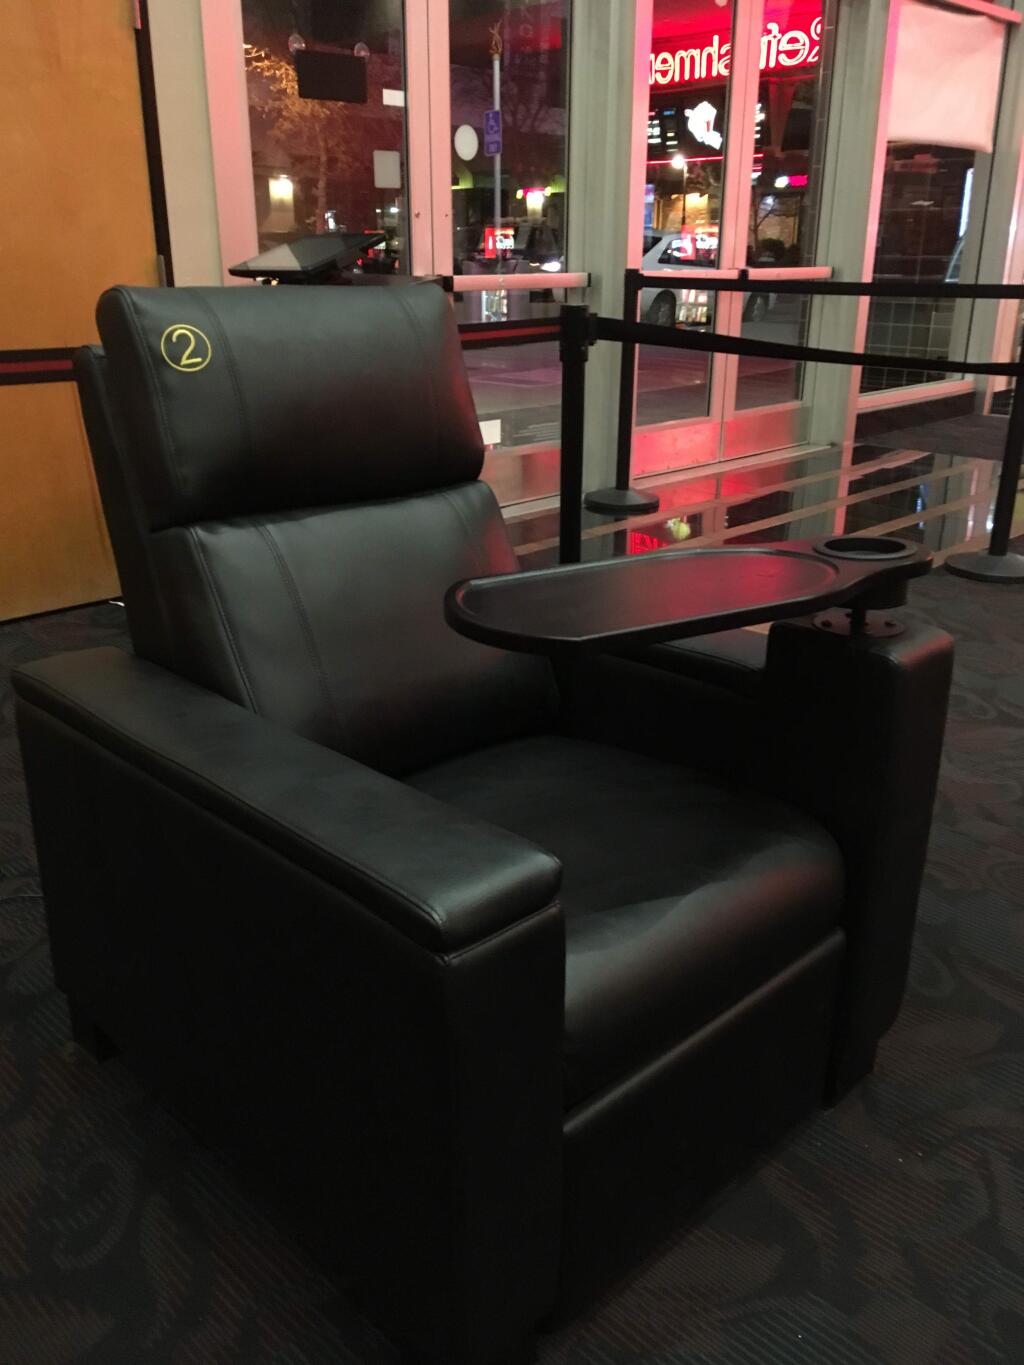 This 'display chair' is a good sneak-peek of what the actual recliners look like at Boulevard 14 Cinemas.